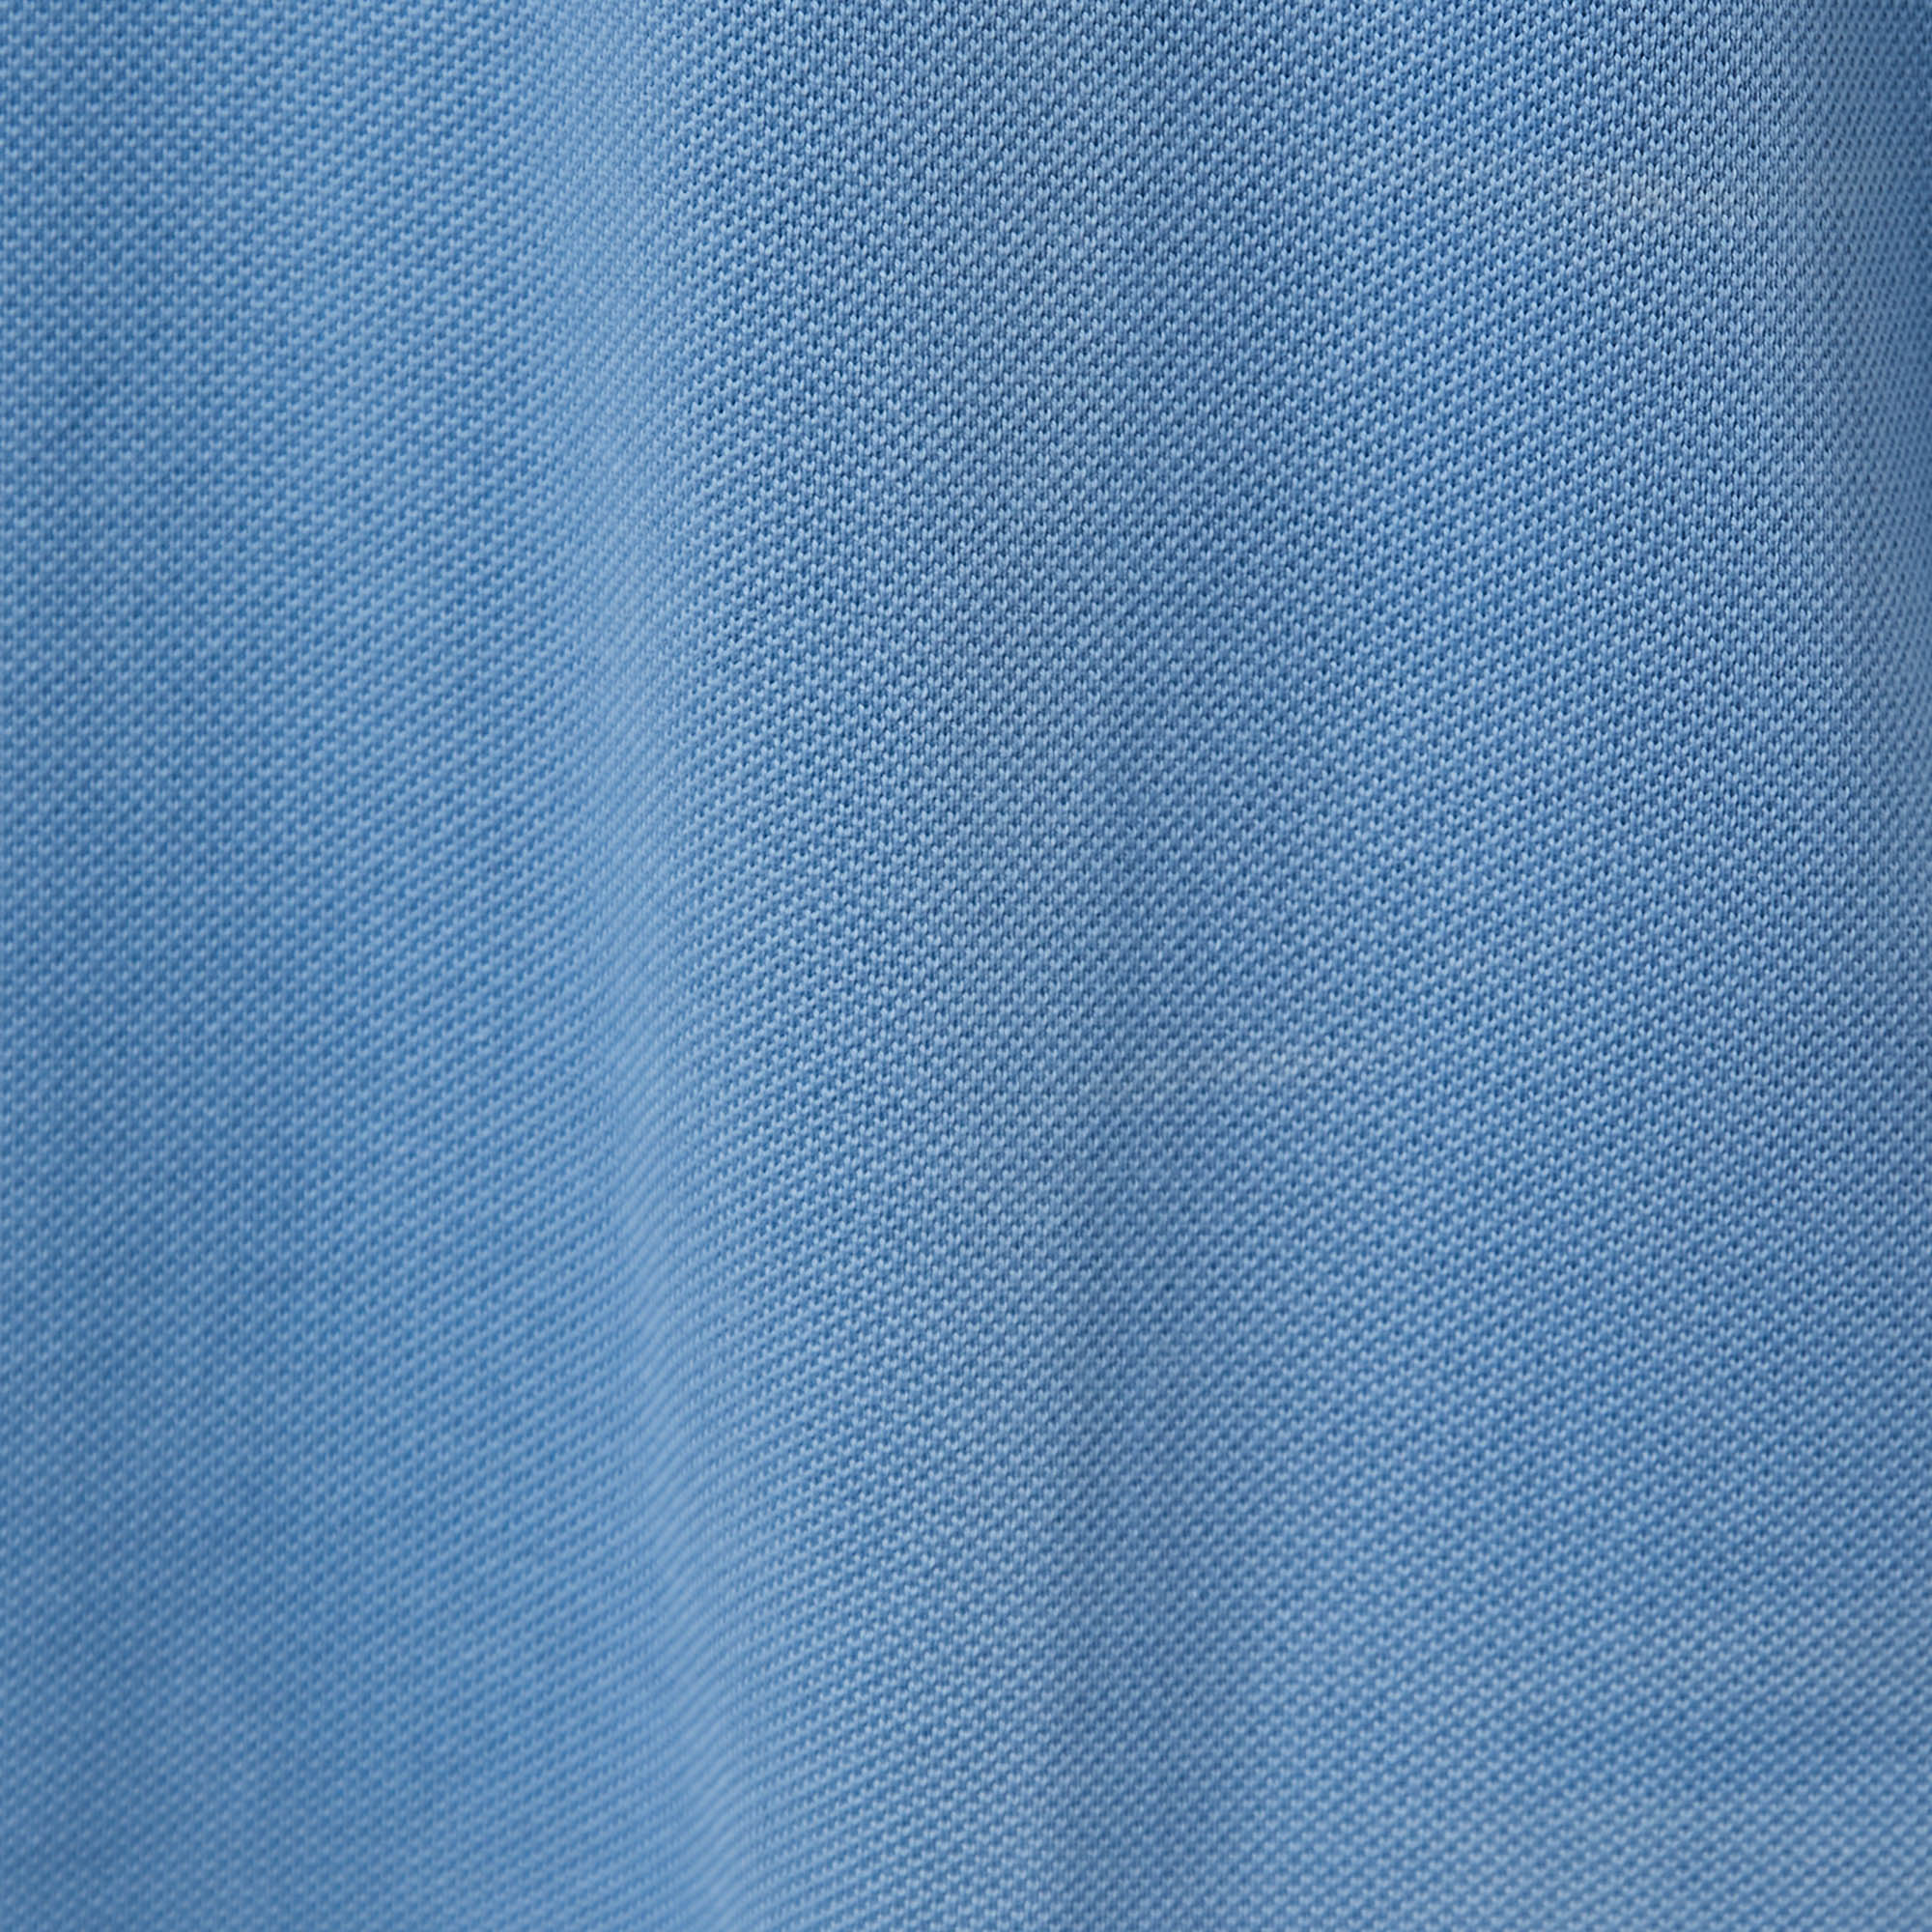 Burberry Blue Cotton Pique Short Sleeve Polo T-Shirt XXL